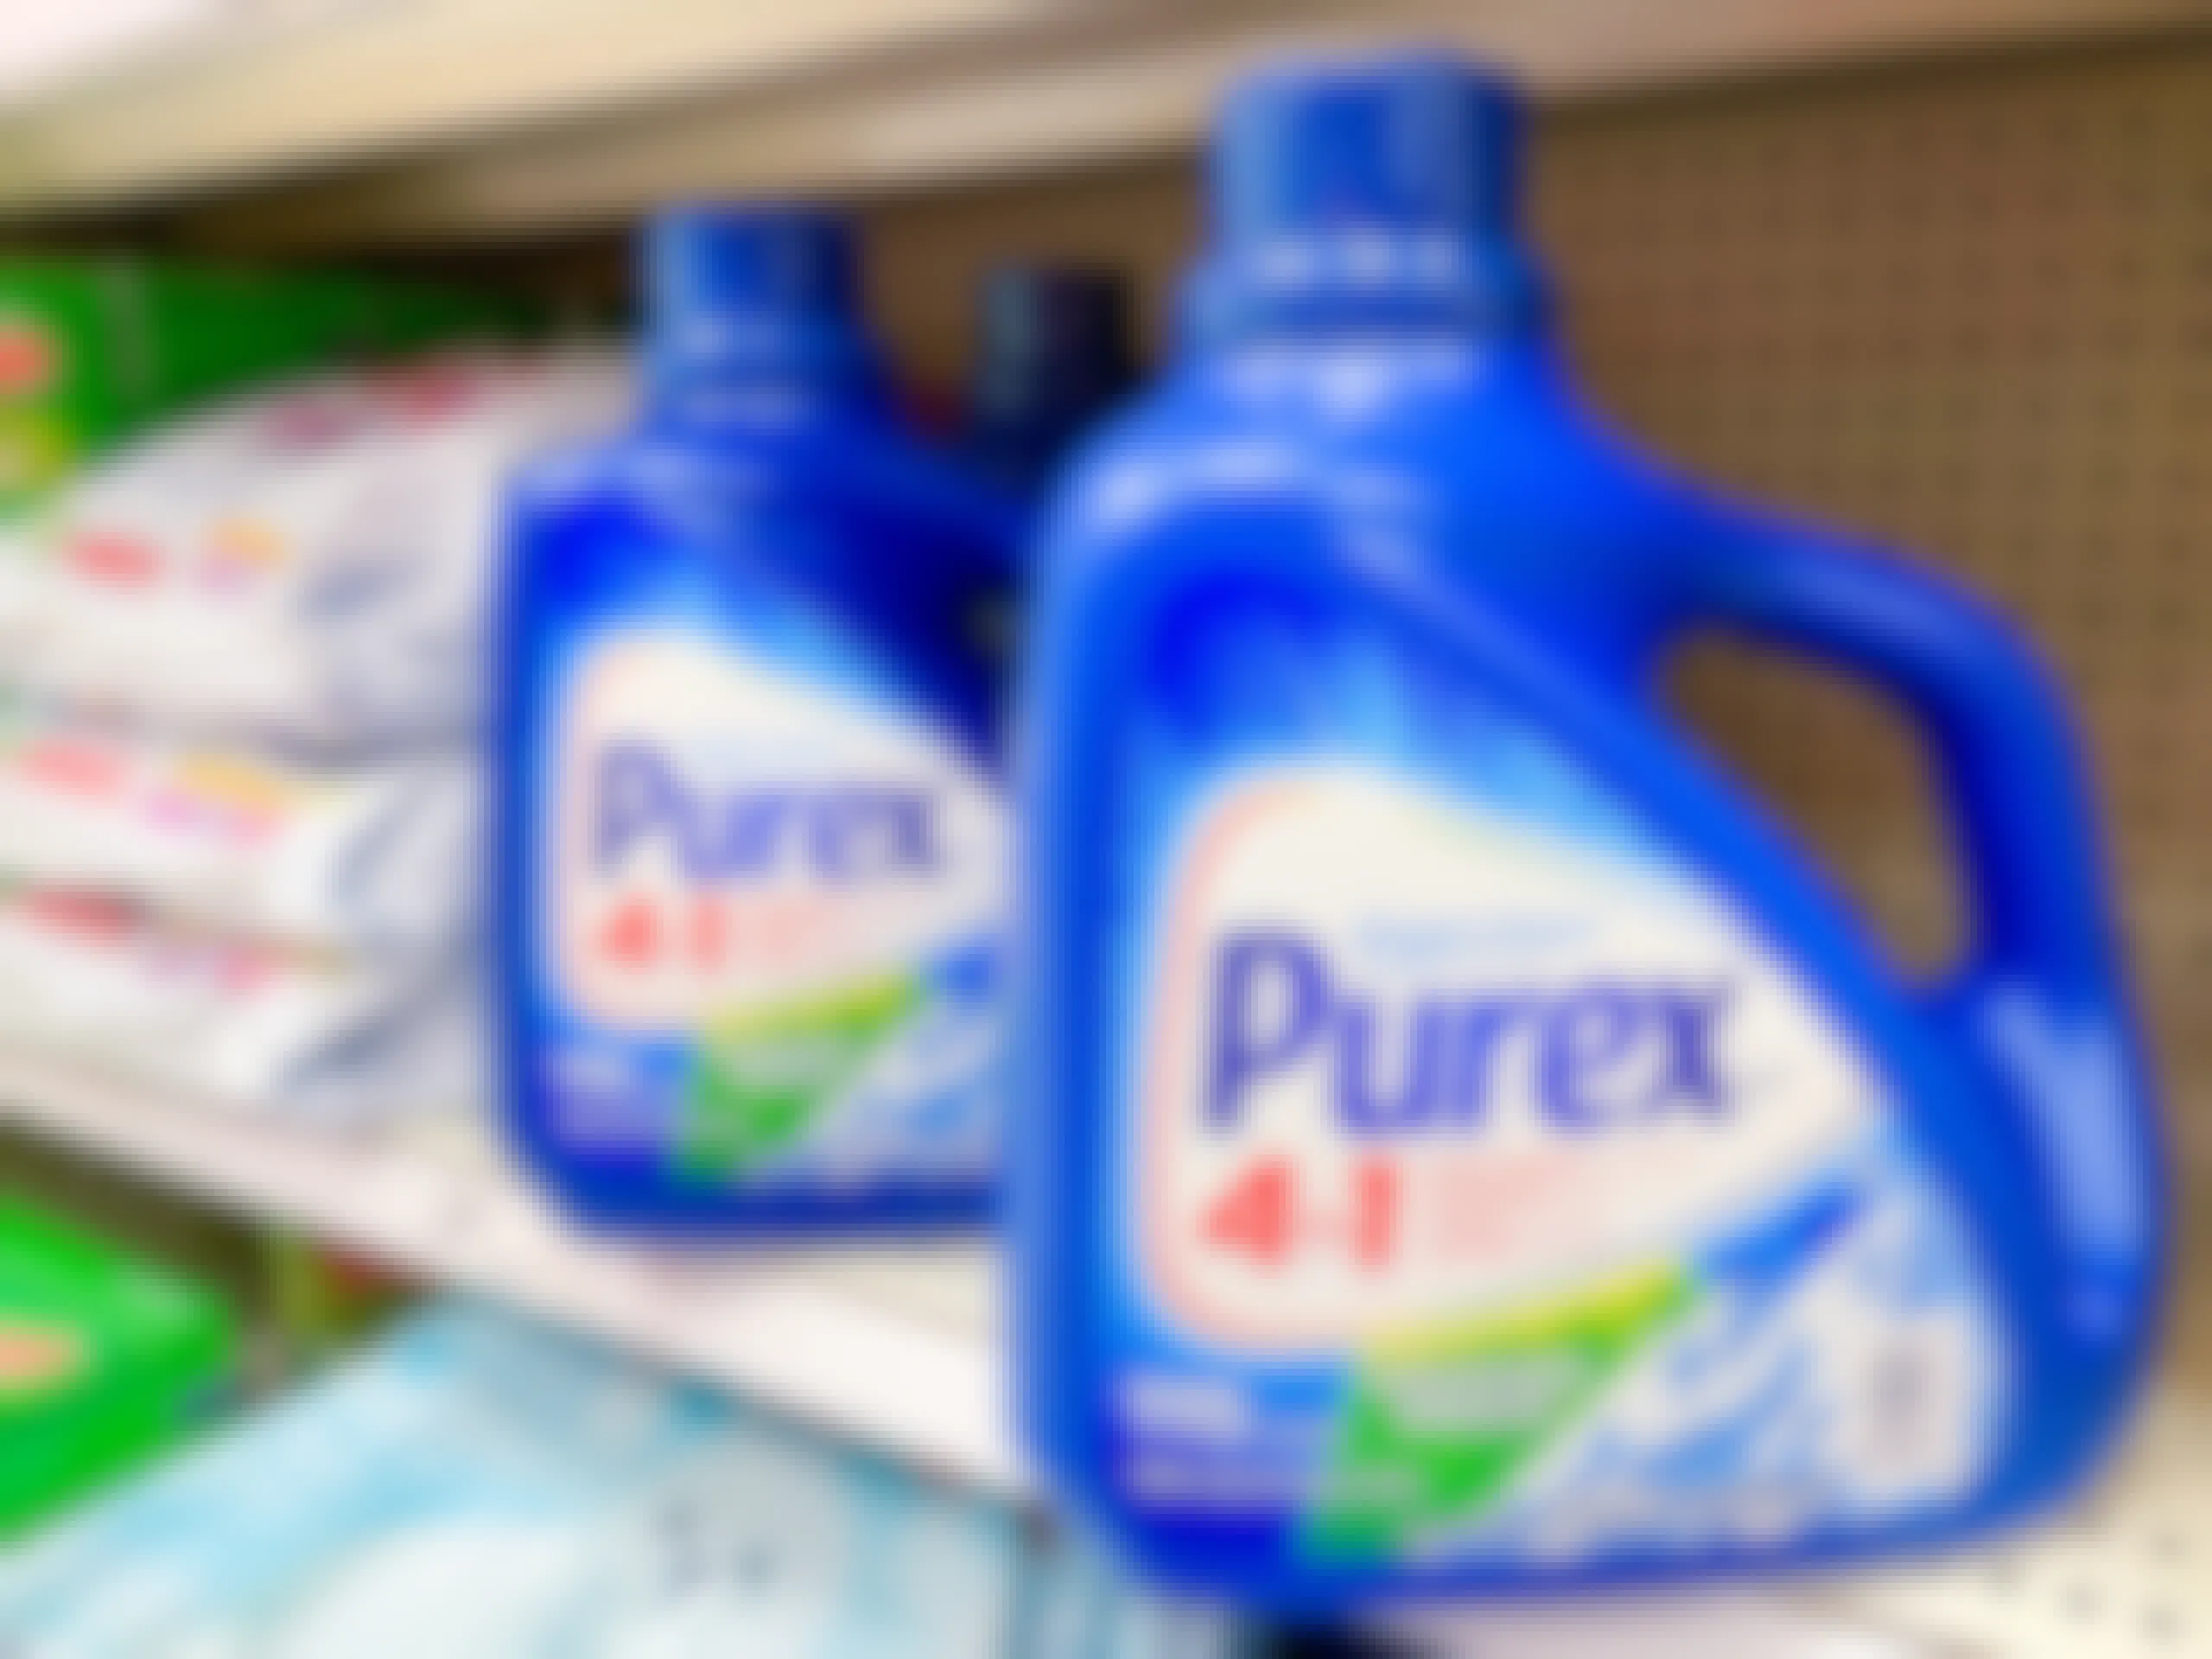 Purex laundry detergent sitting on a store shelf.